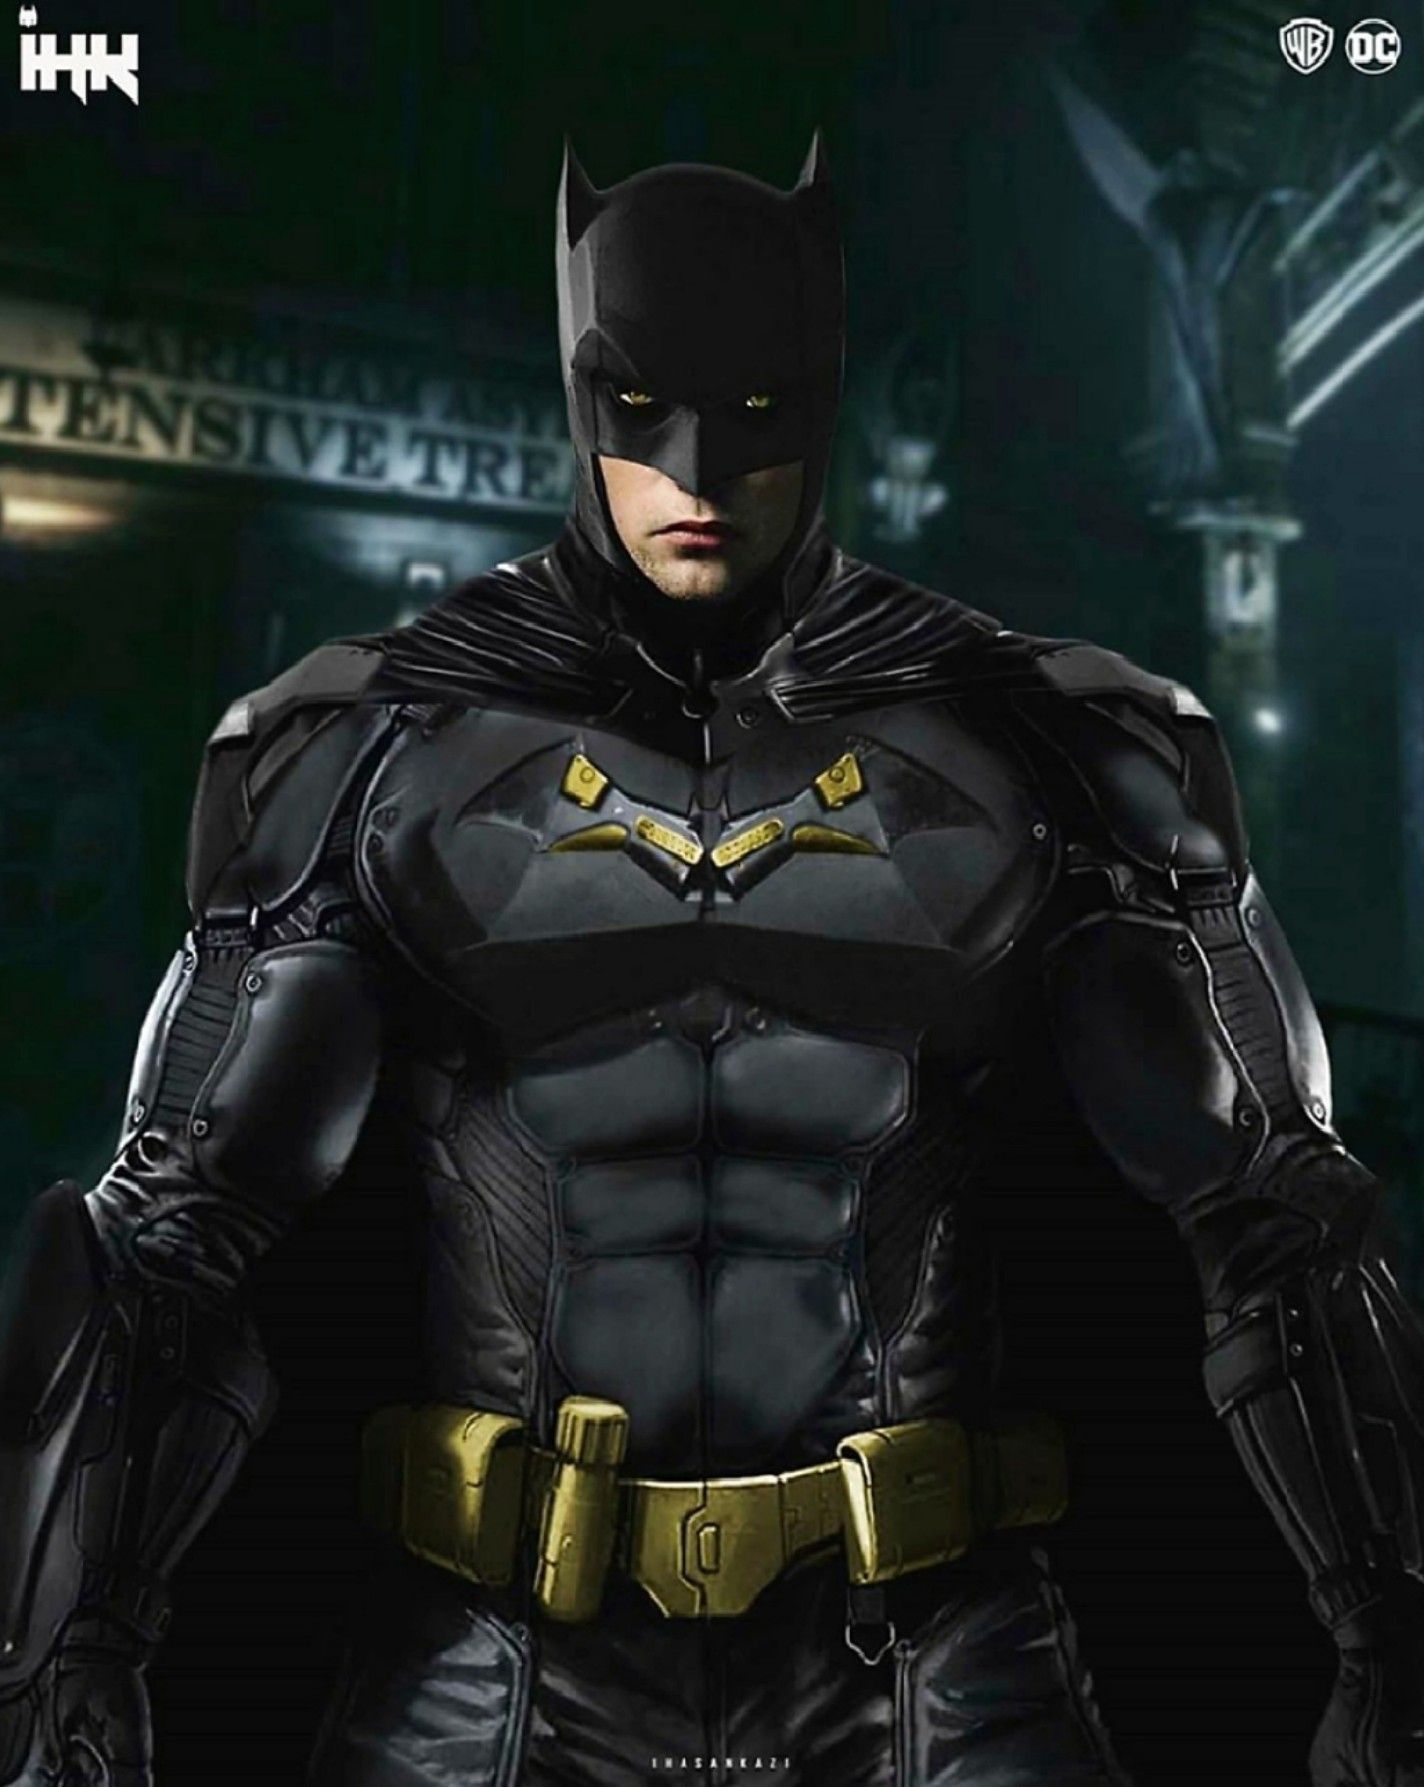 The Batman (2021) Pattinson's Batman Armor Concept Art